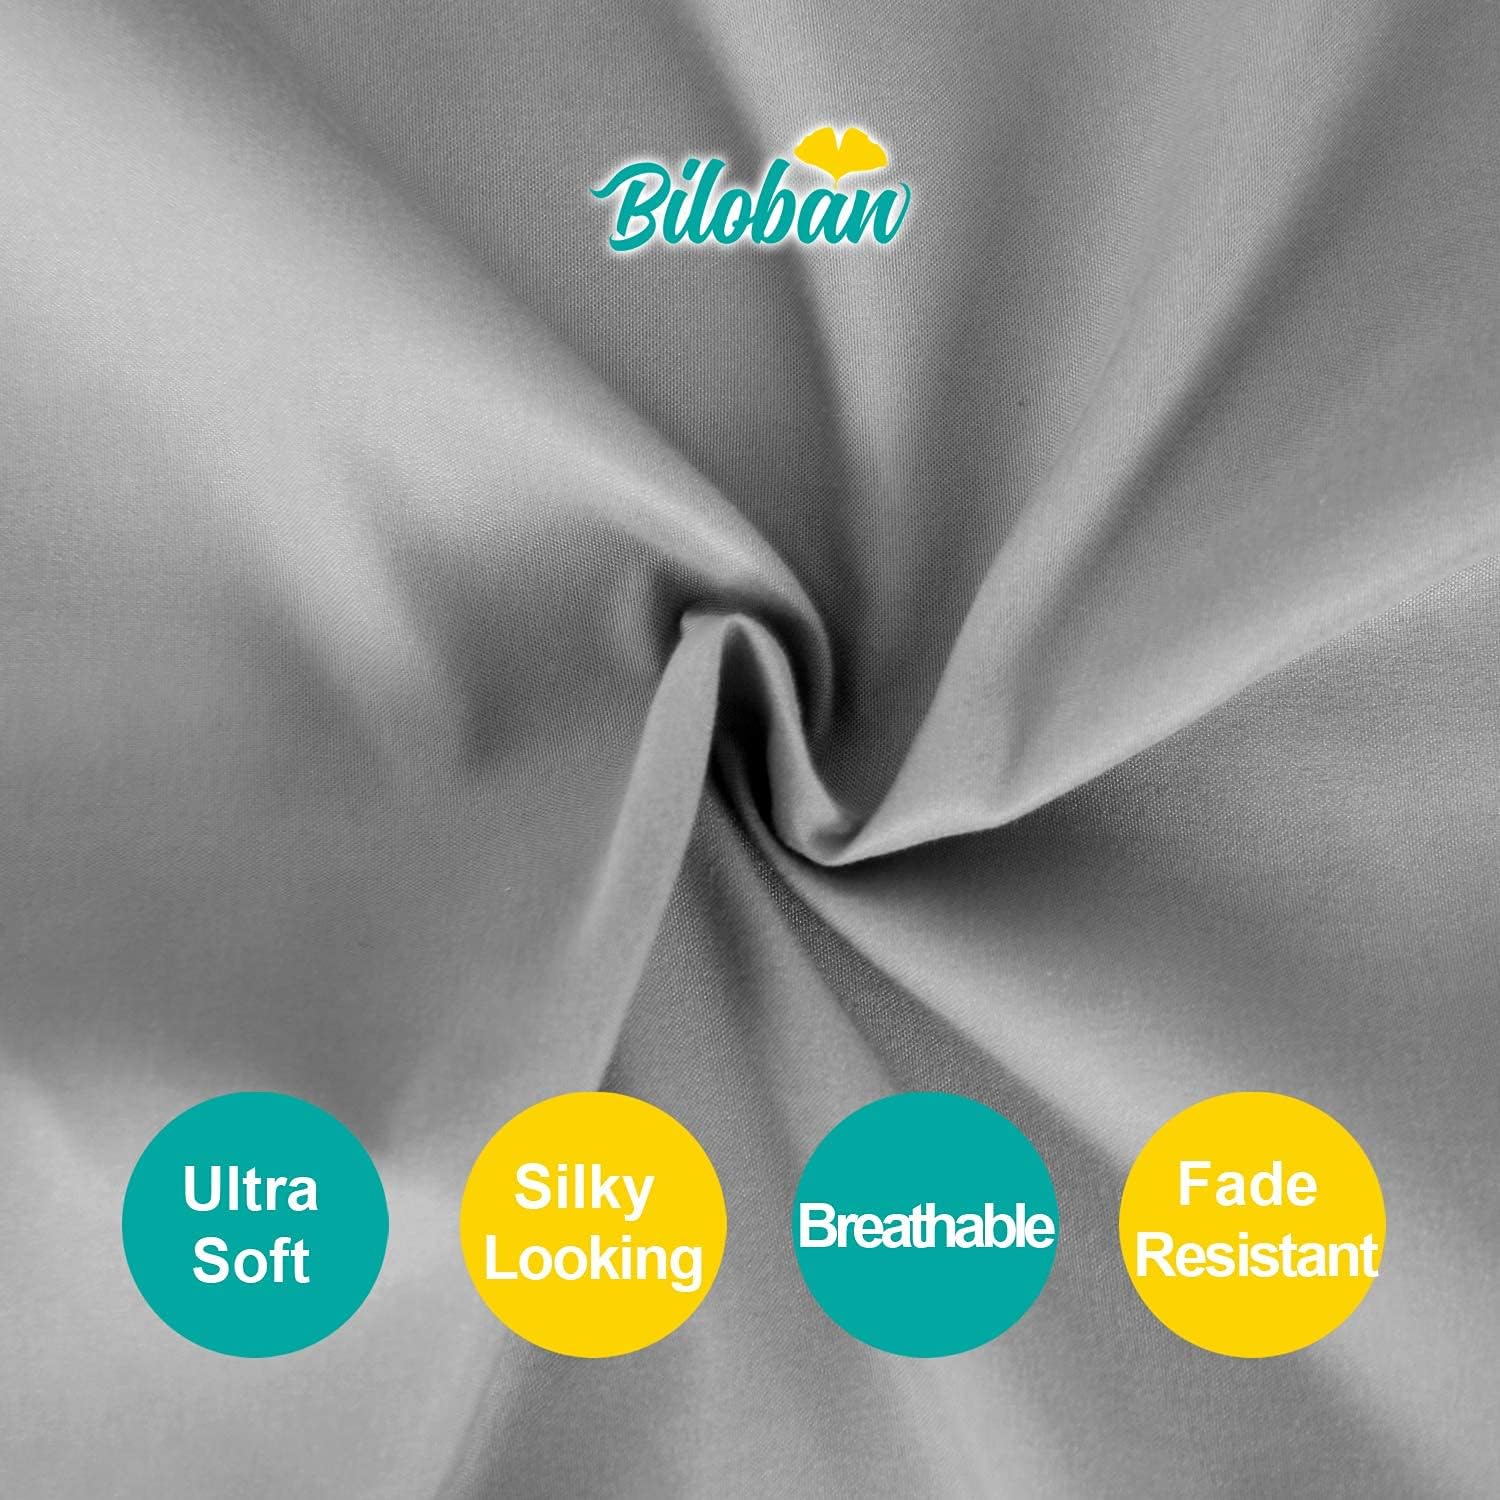 Crib Skirt - Dust Ruffle with Lovely Pompoms, 14" Drop, Grey (for Standard Crib/ Toddler Bed) - Biloban Online Store